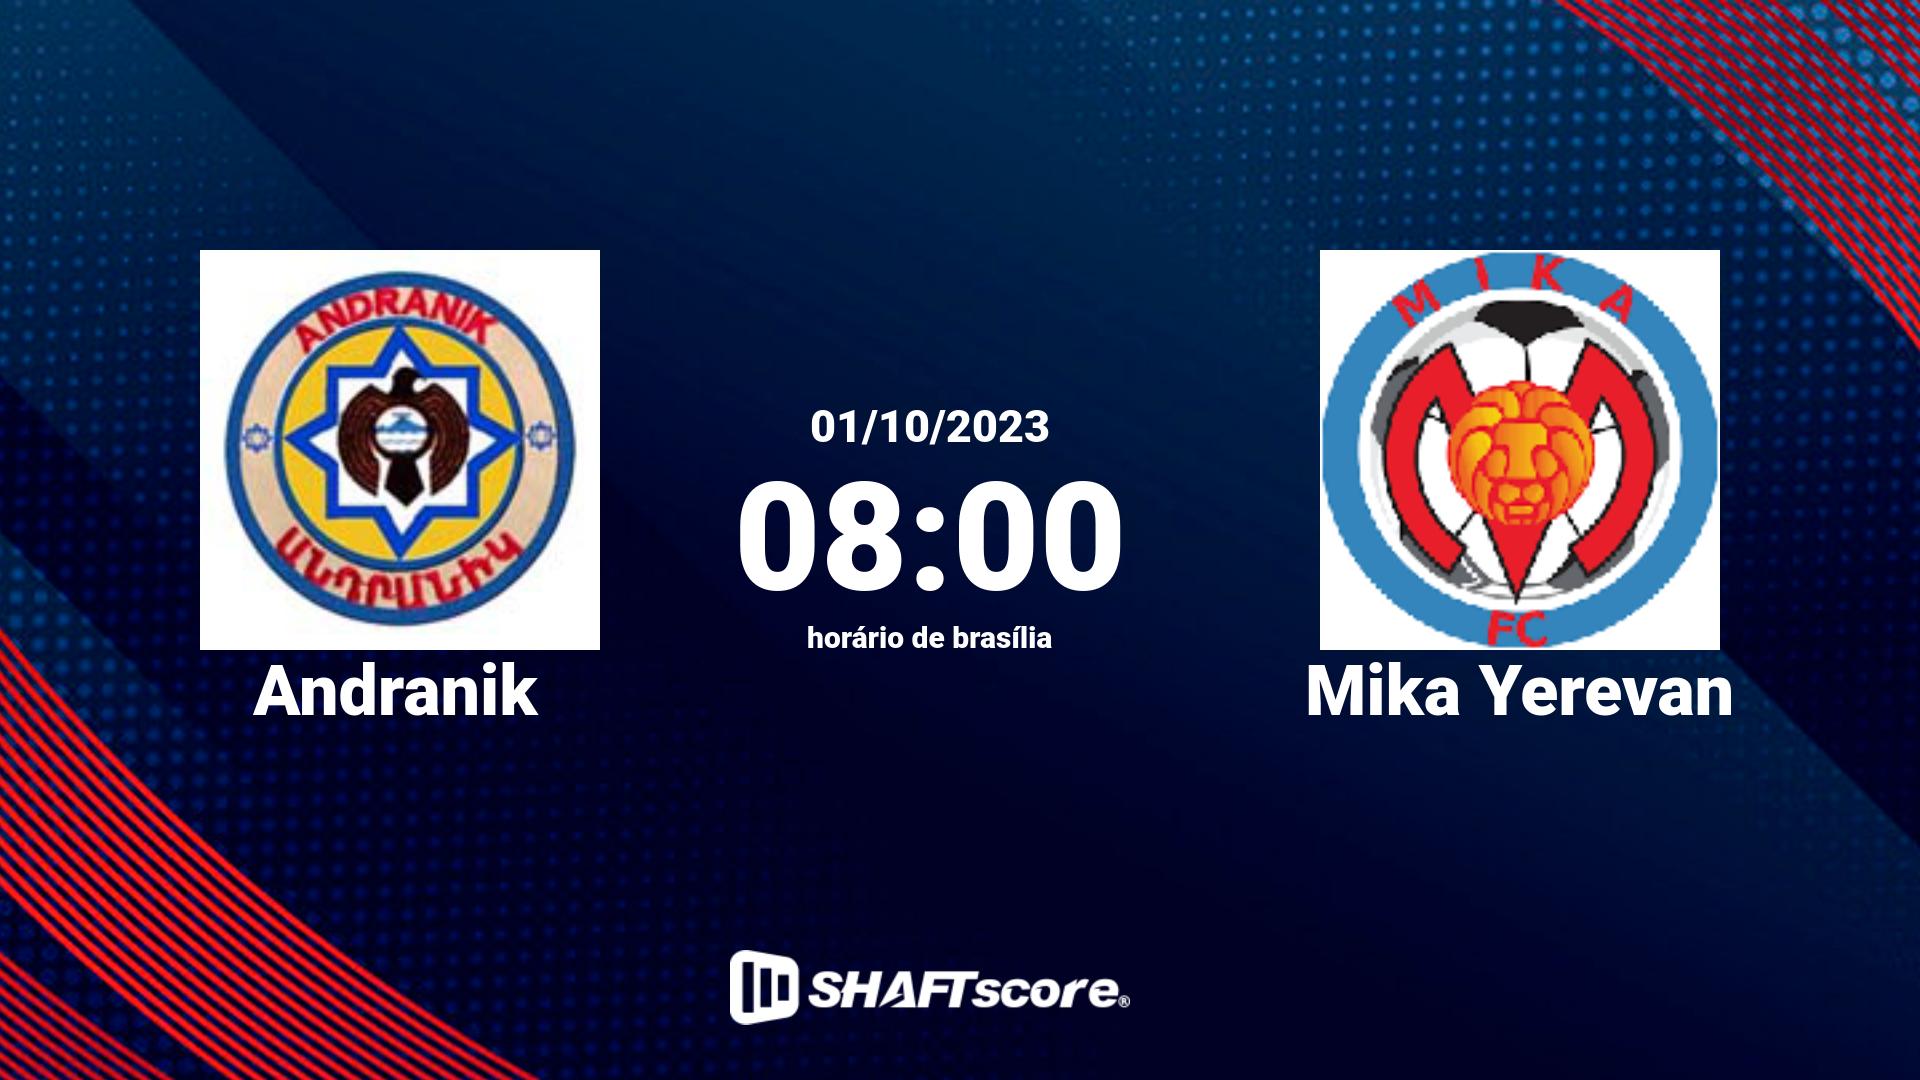 Estatísticas do jogo Andranik vs Mika Yerevan 01.10 08:00